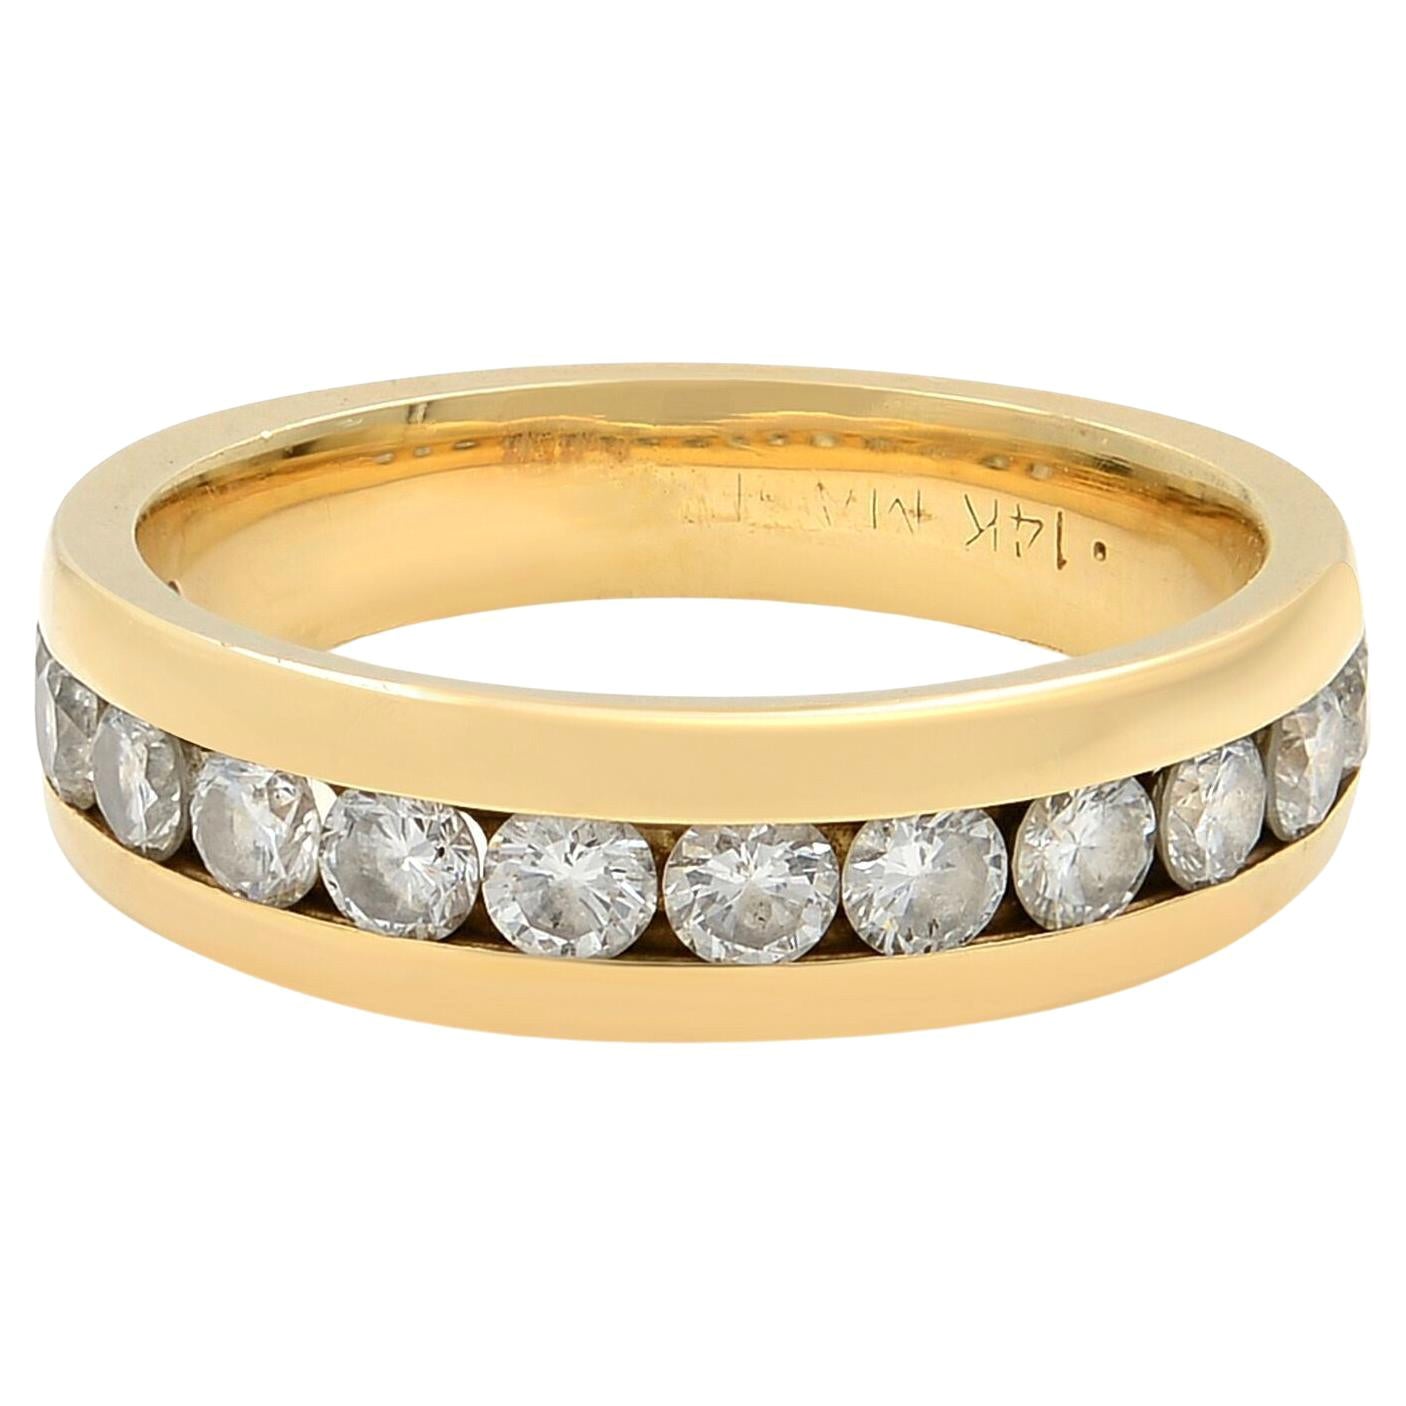 Rachel Koen Round Cut Diamond Wedding Ring Band 14K Yellow Gold 0.56Cttw For Sale